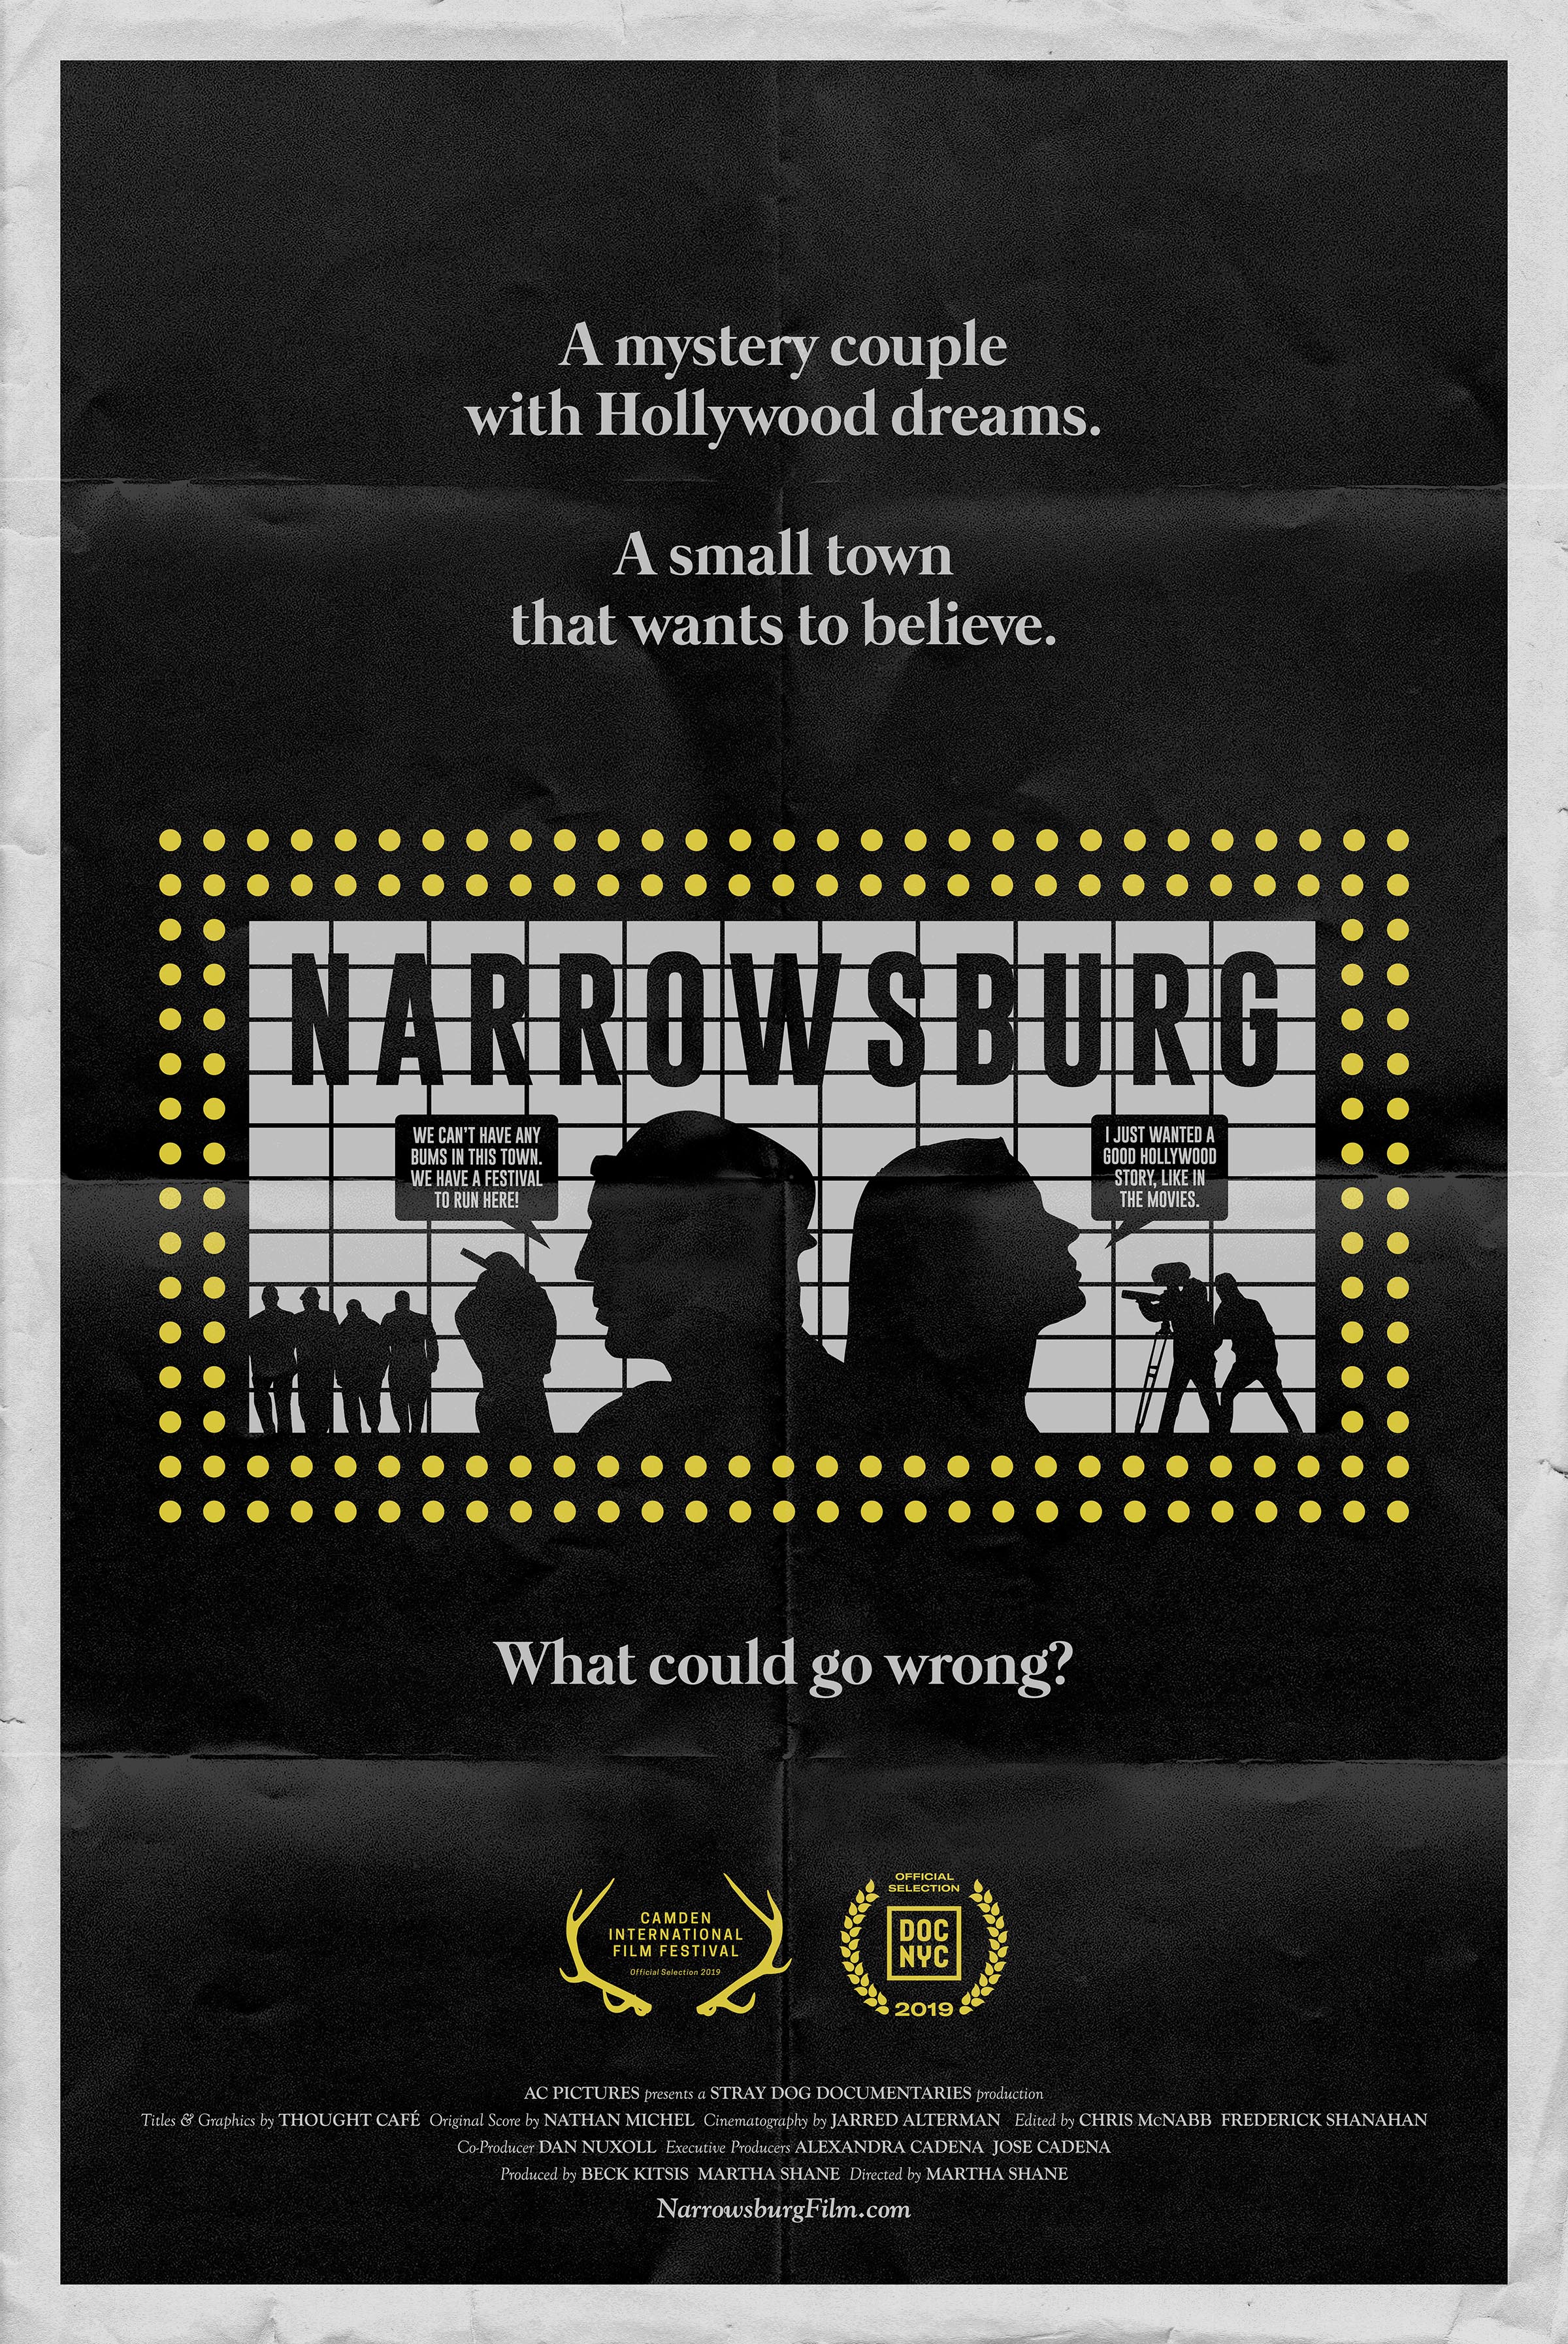 Nonton film Narrowsburg layarkaca21 indoxx1 ganool online streaming terbaru